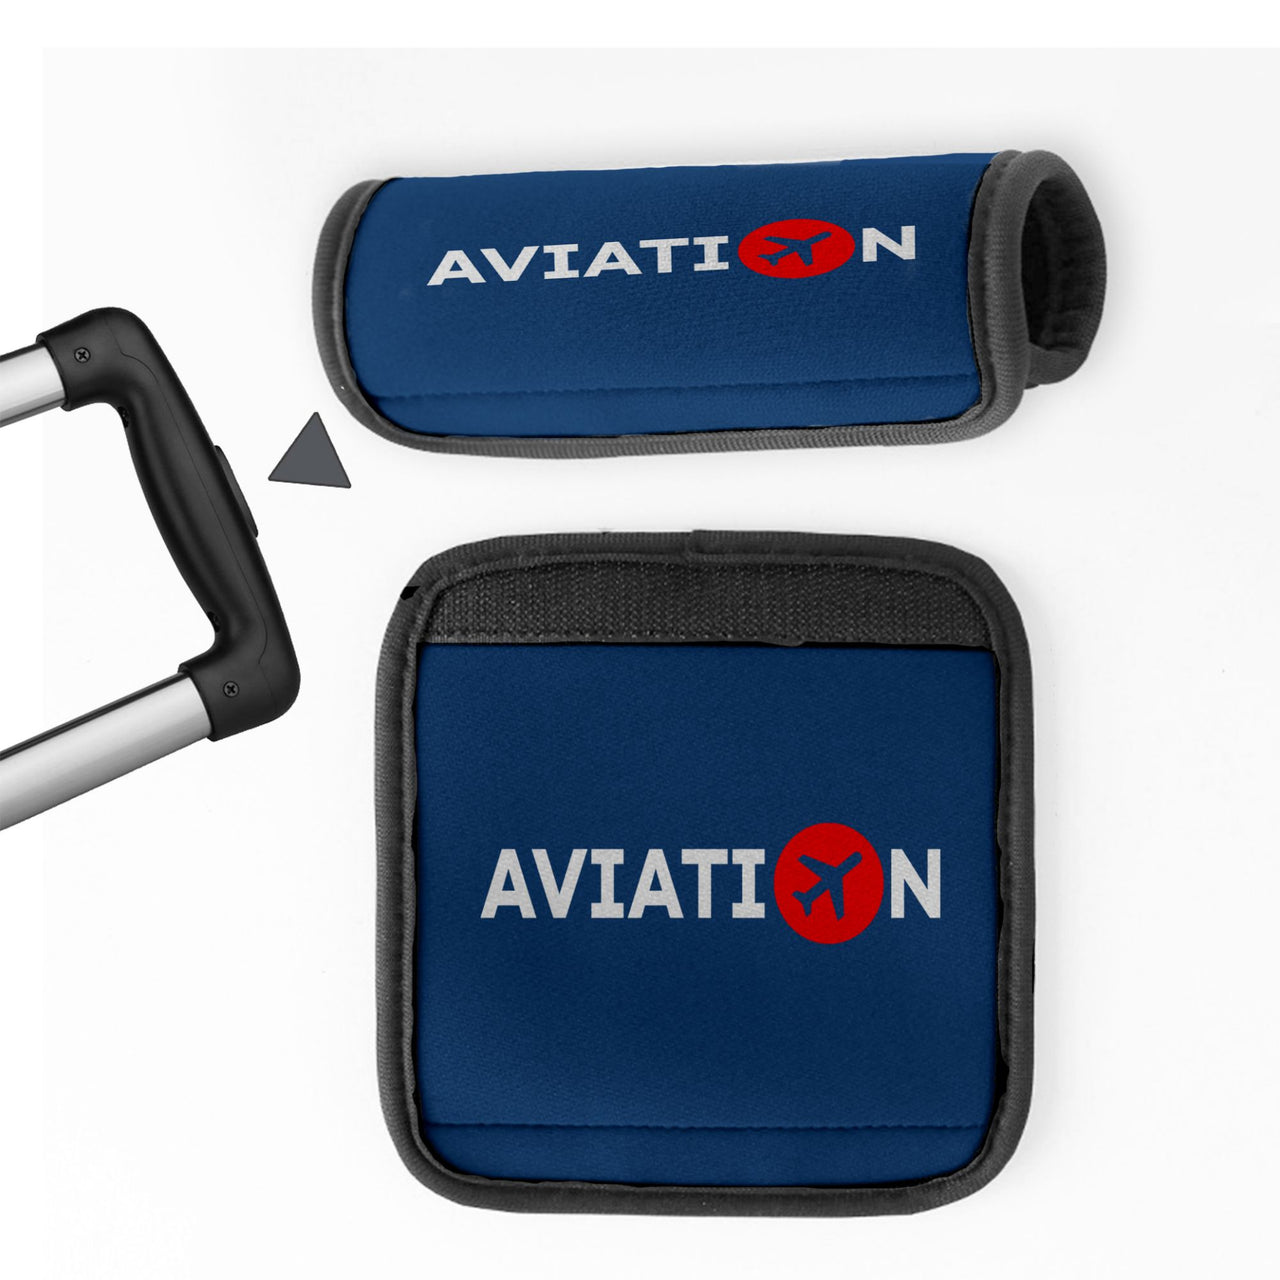 Aviation Designed Neoprene Luggage Handle Covers